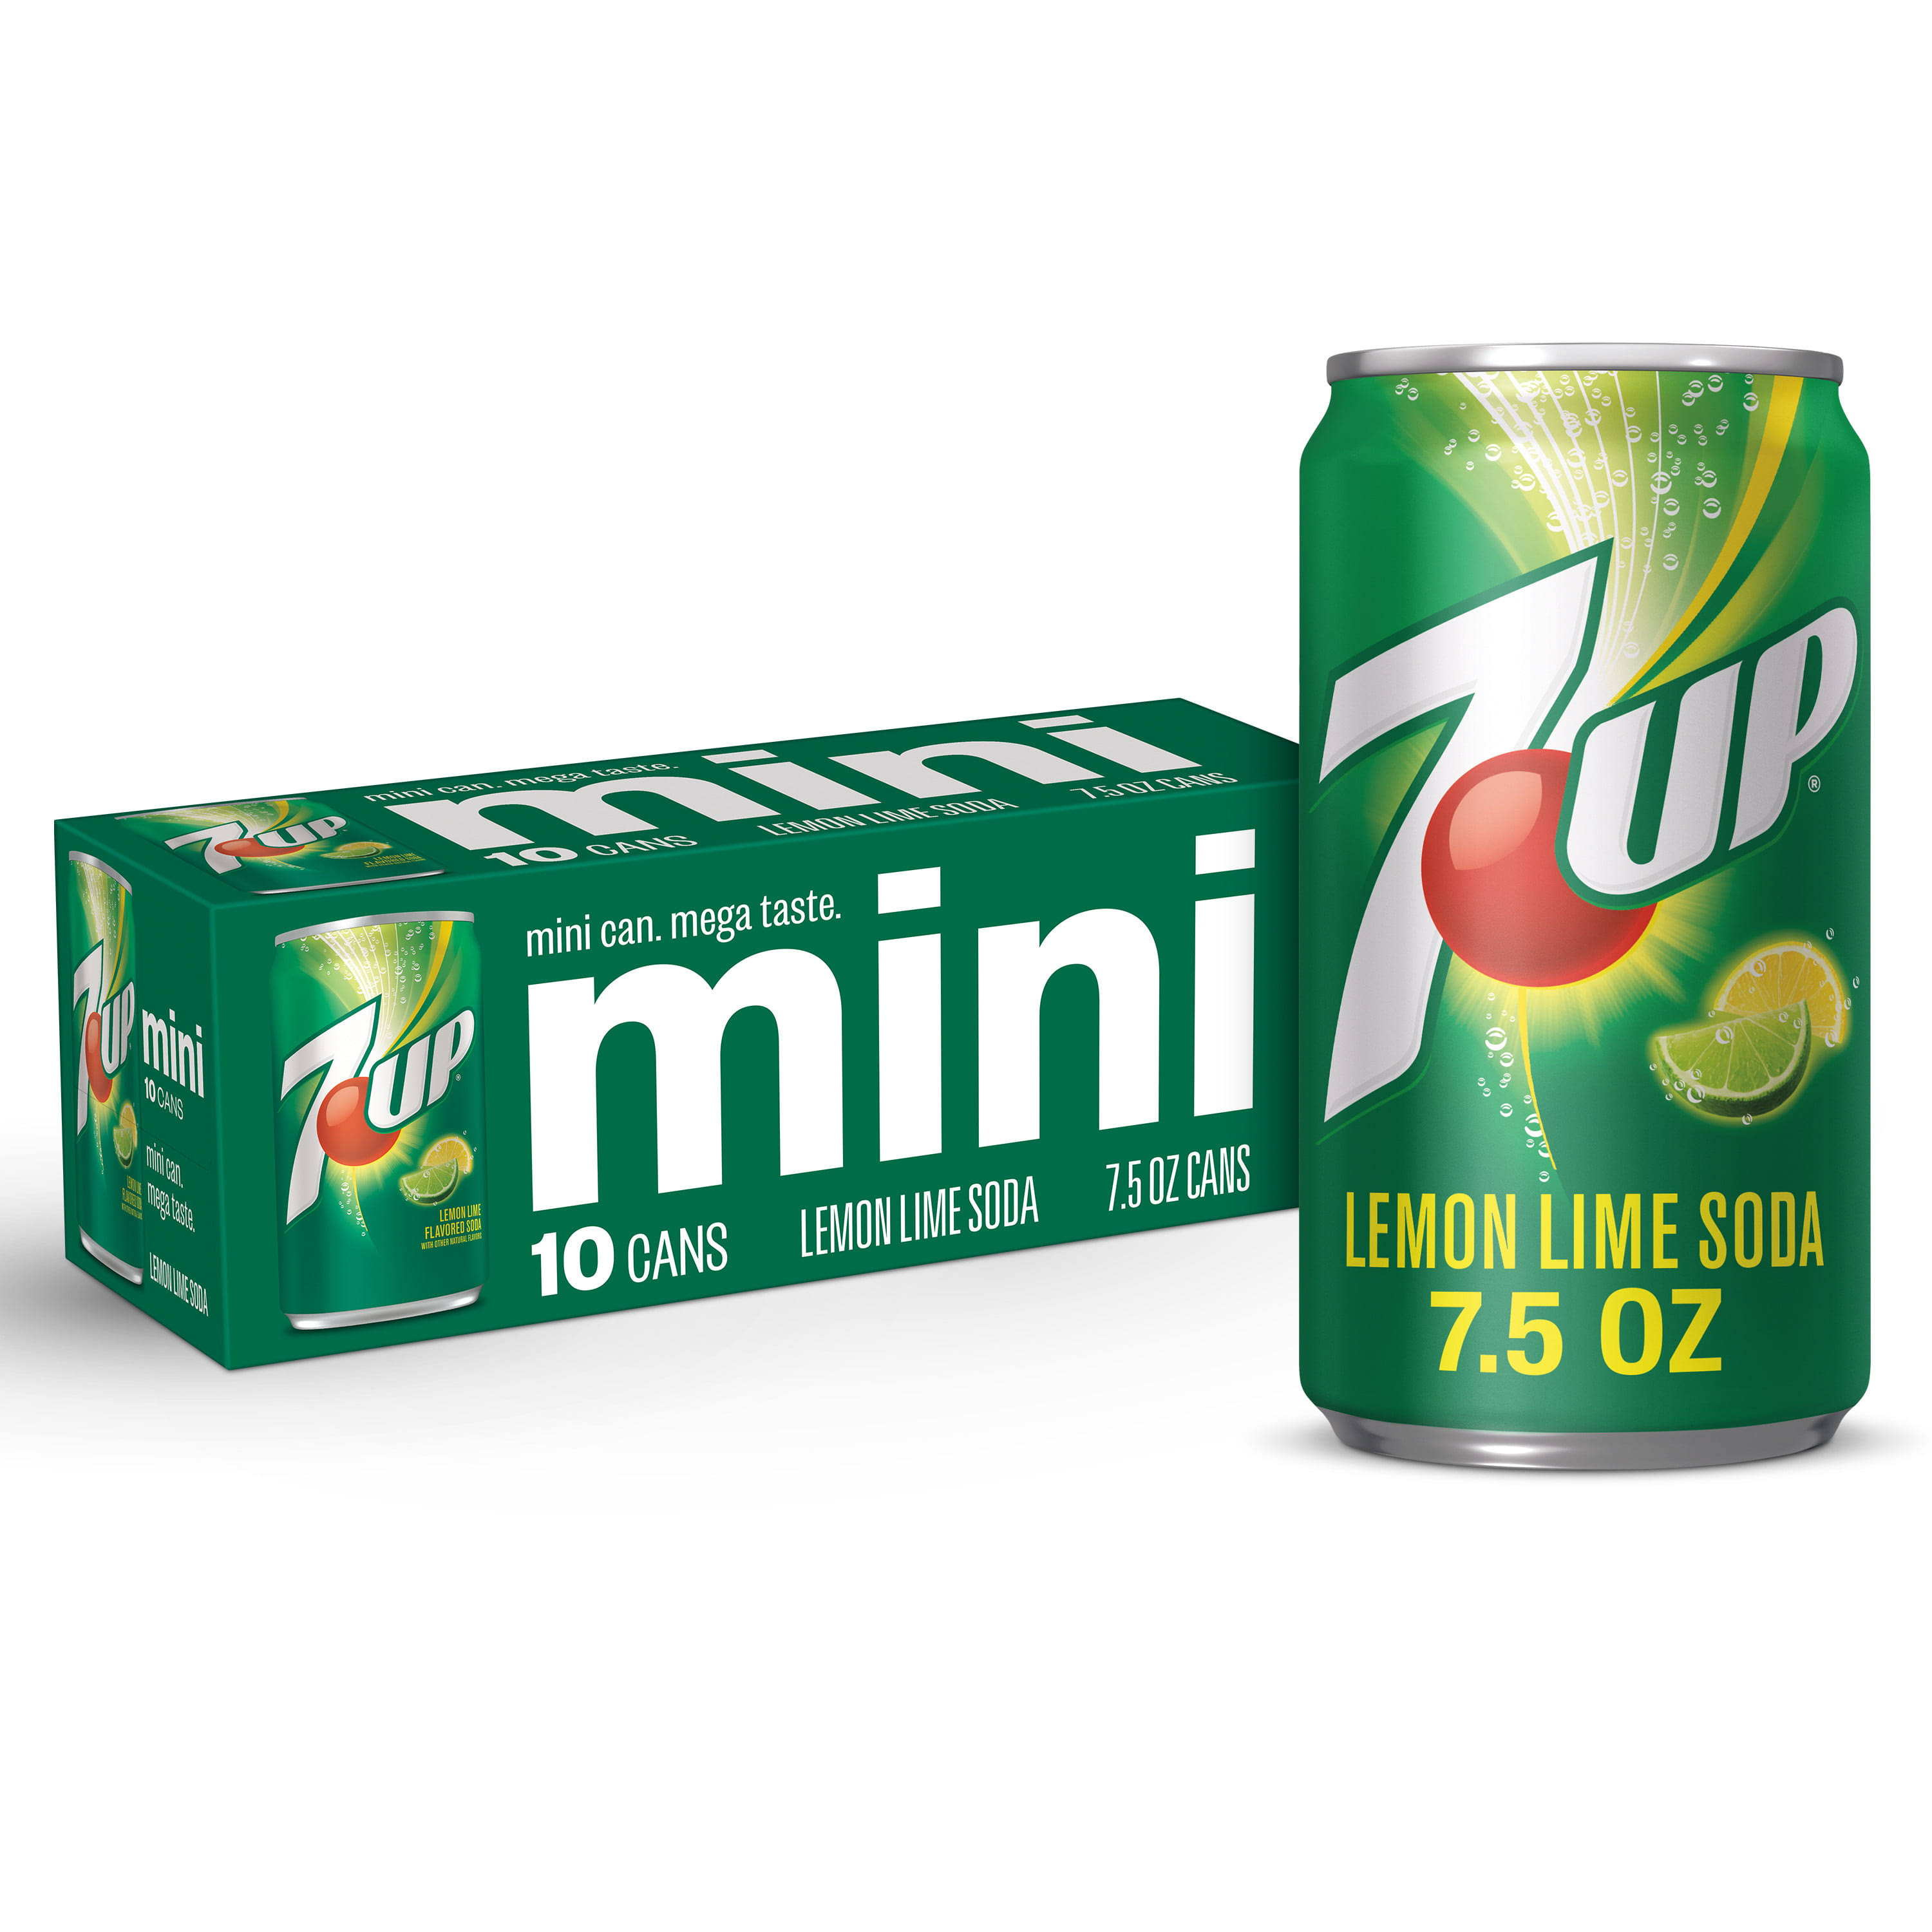 7-Up Soda, Lemon Lime, Mini - 10 pack, 7.5 fl oz cans